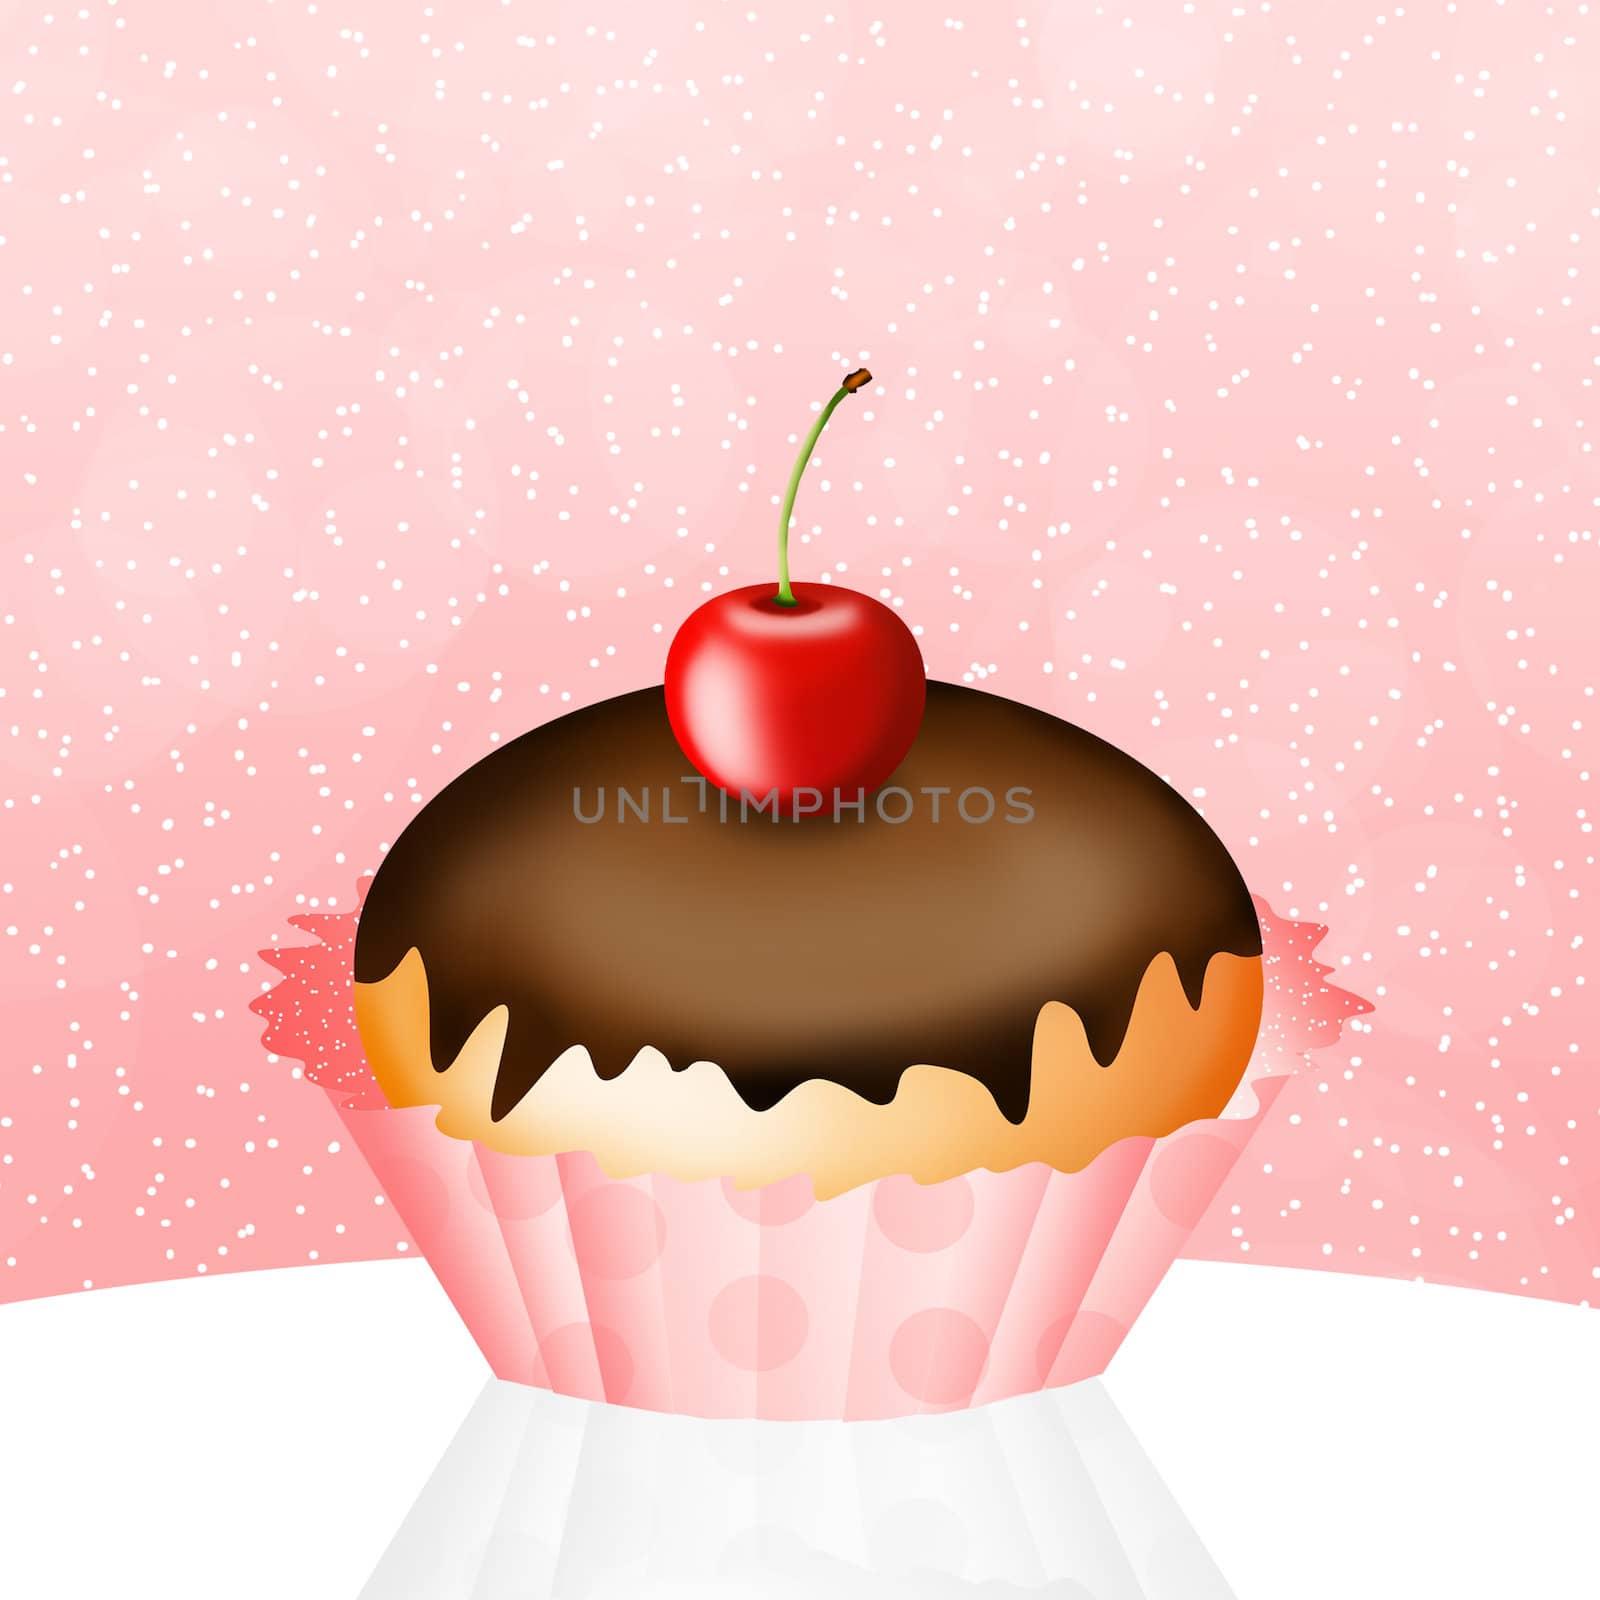 chocolate cake with cherry